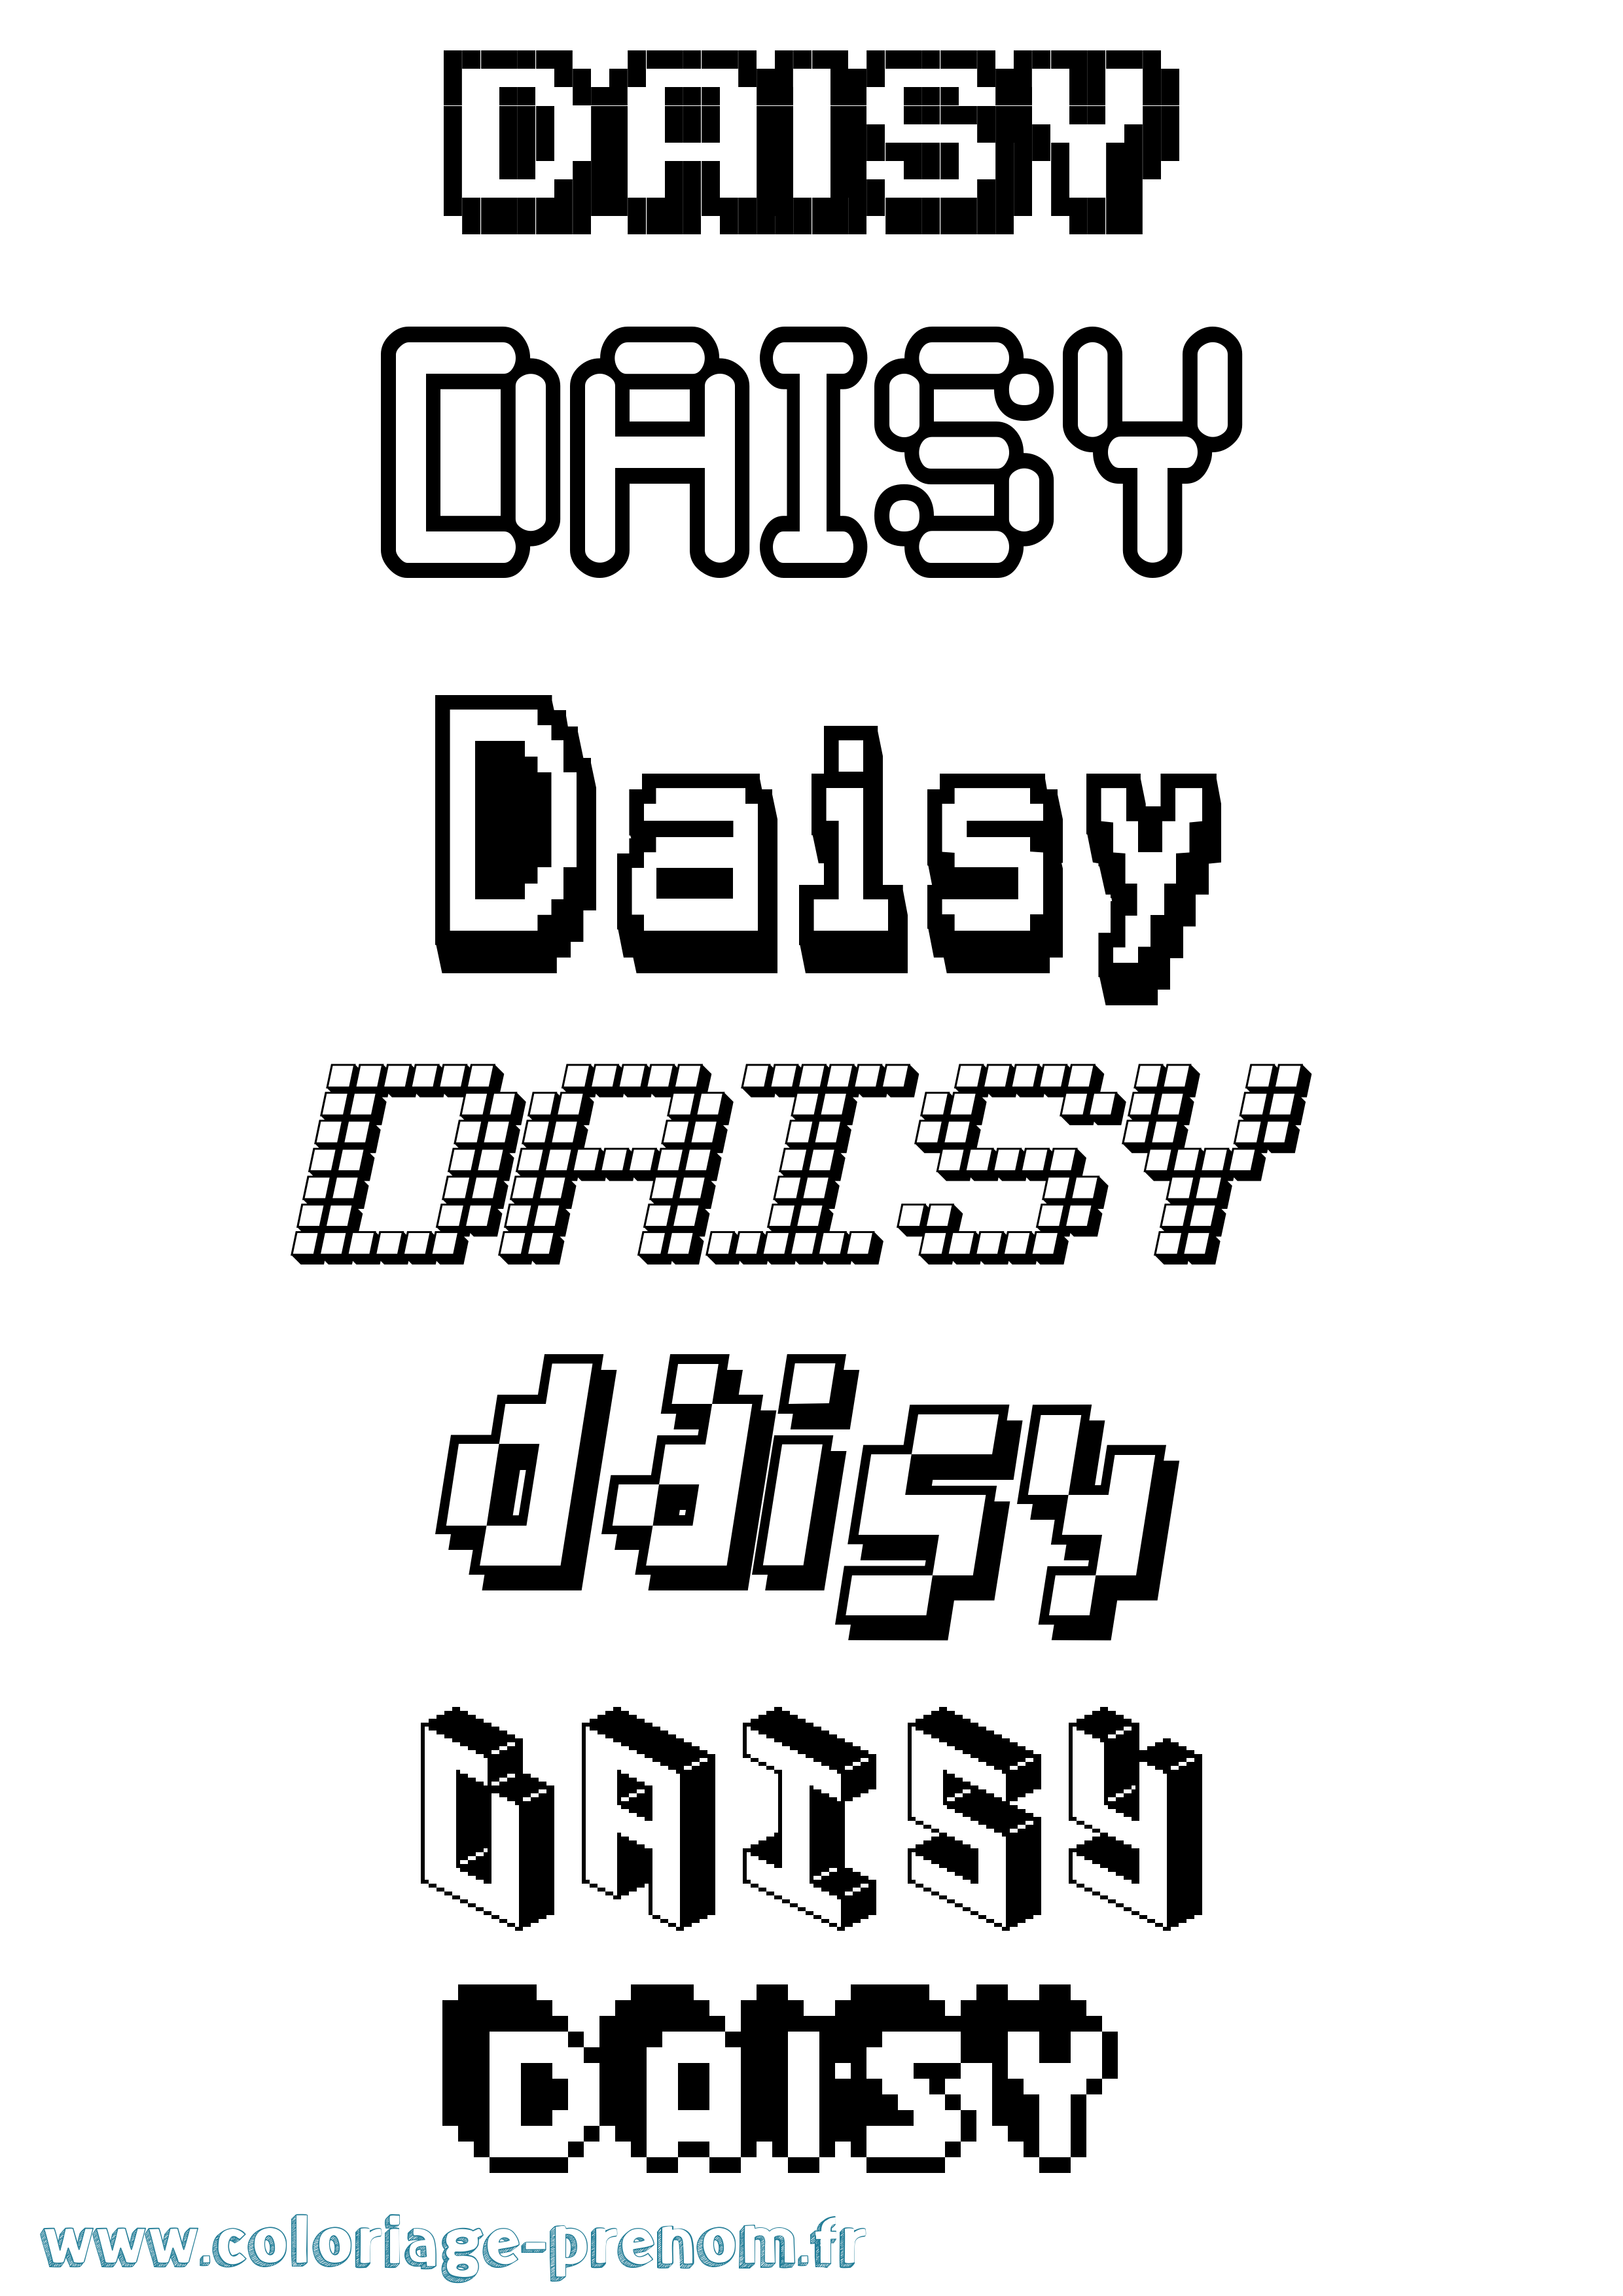 Coloriage prénom Daisy Pixel